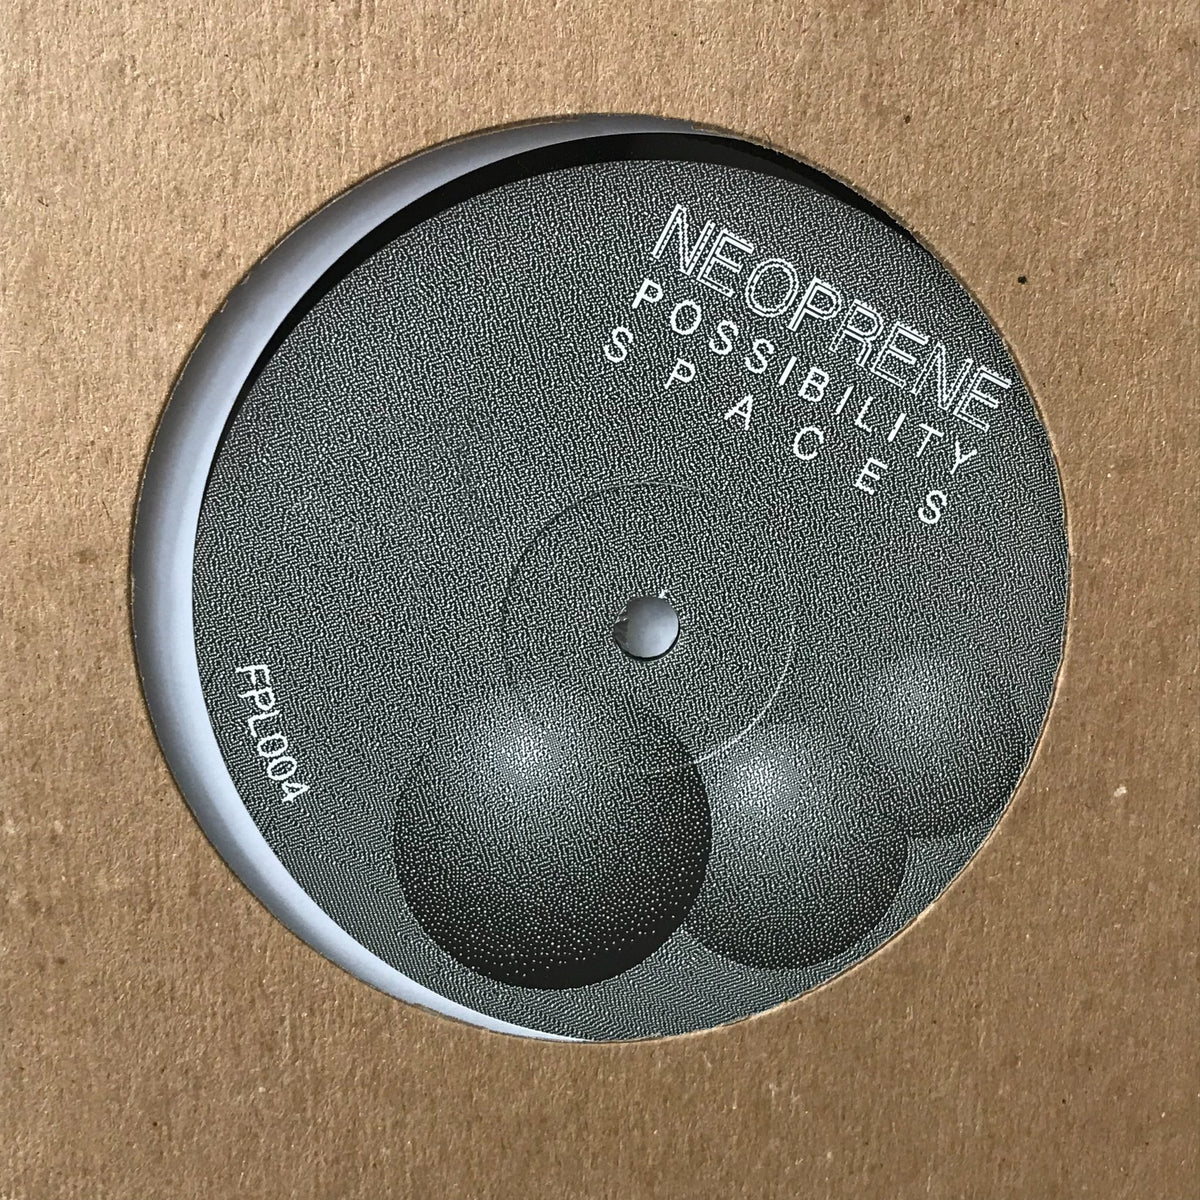 Neoprene - Possibility Spaces - BROKEN 8 RECORDS